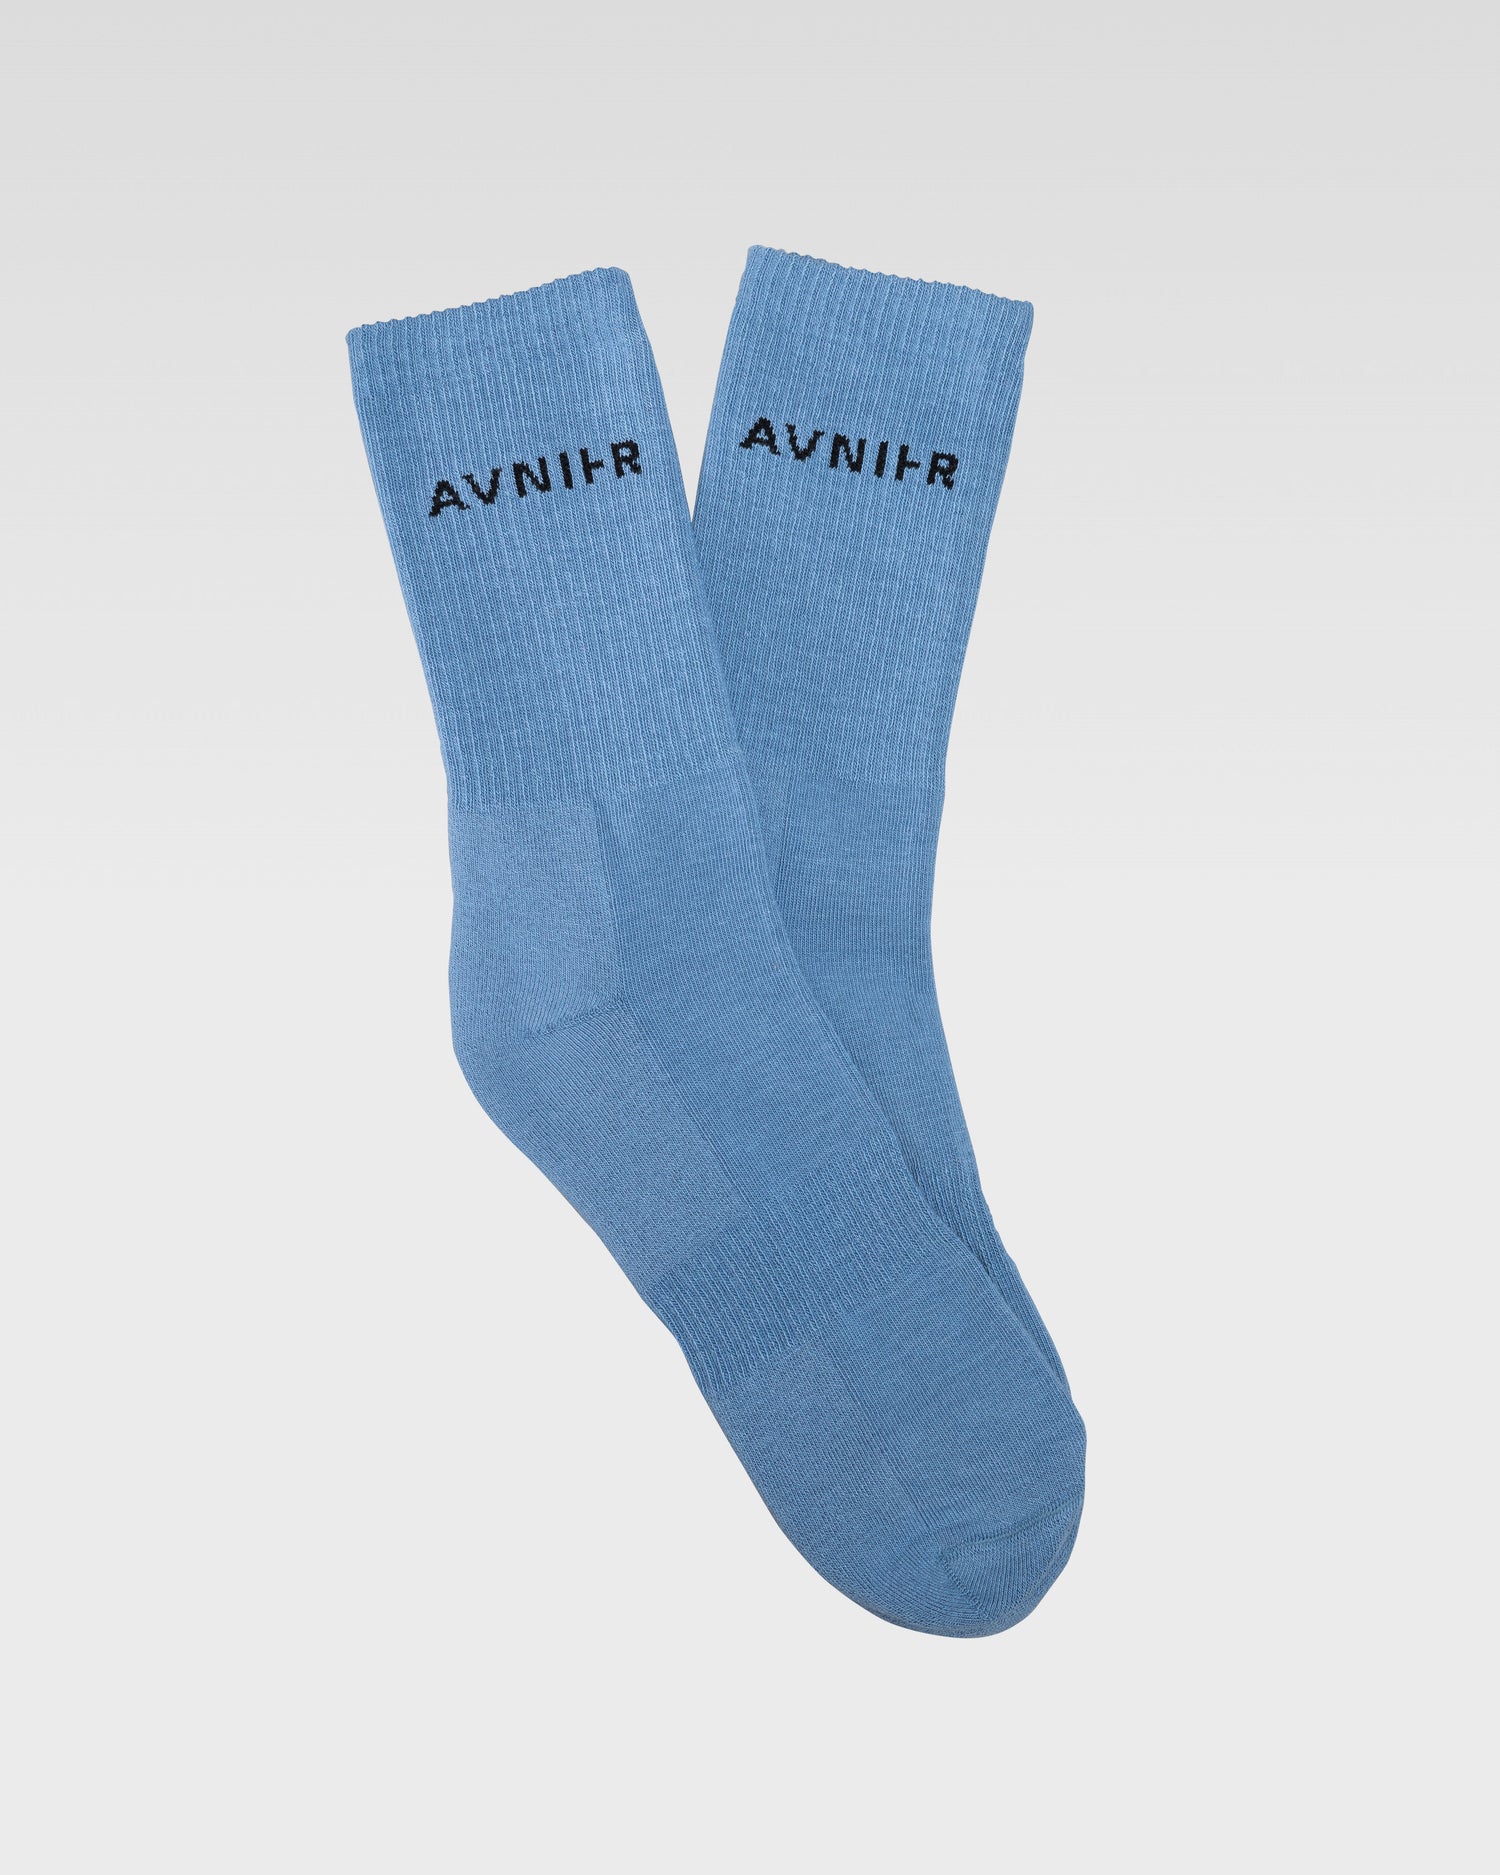 socks-loop-allure-horizontal-avnier-vetement-orelsan-3-packshot-dos - bleu ciel